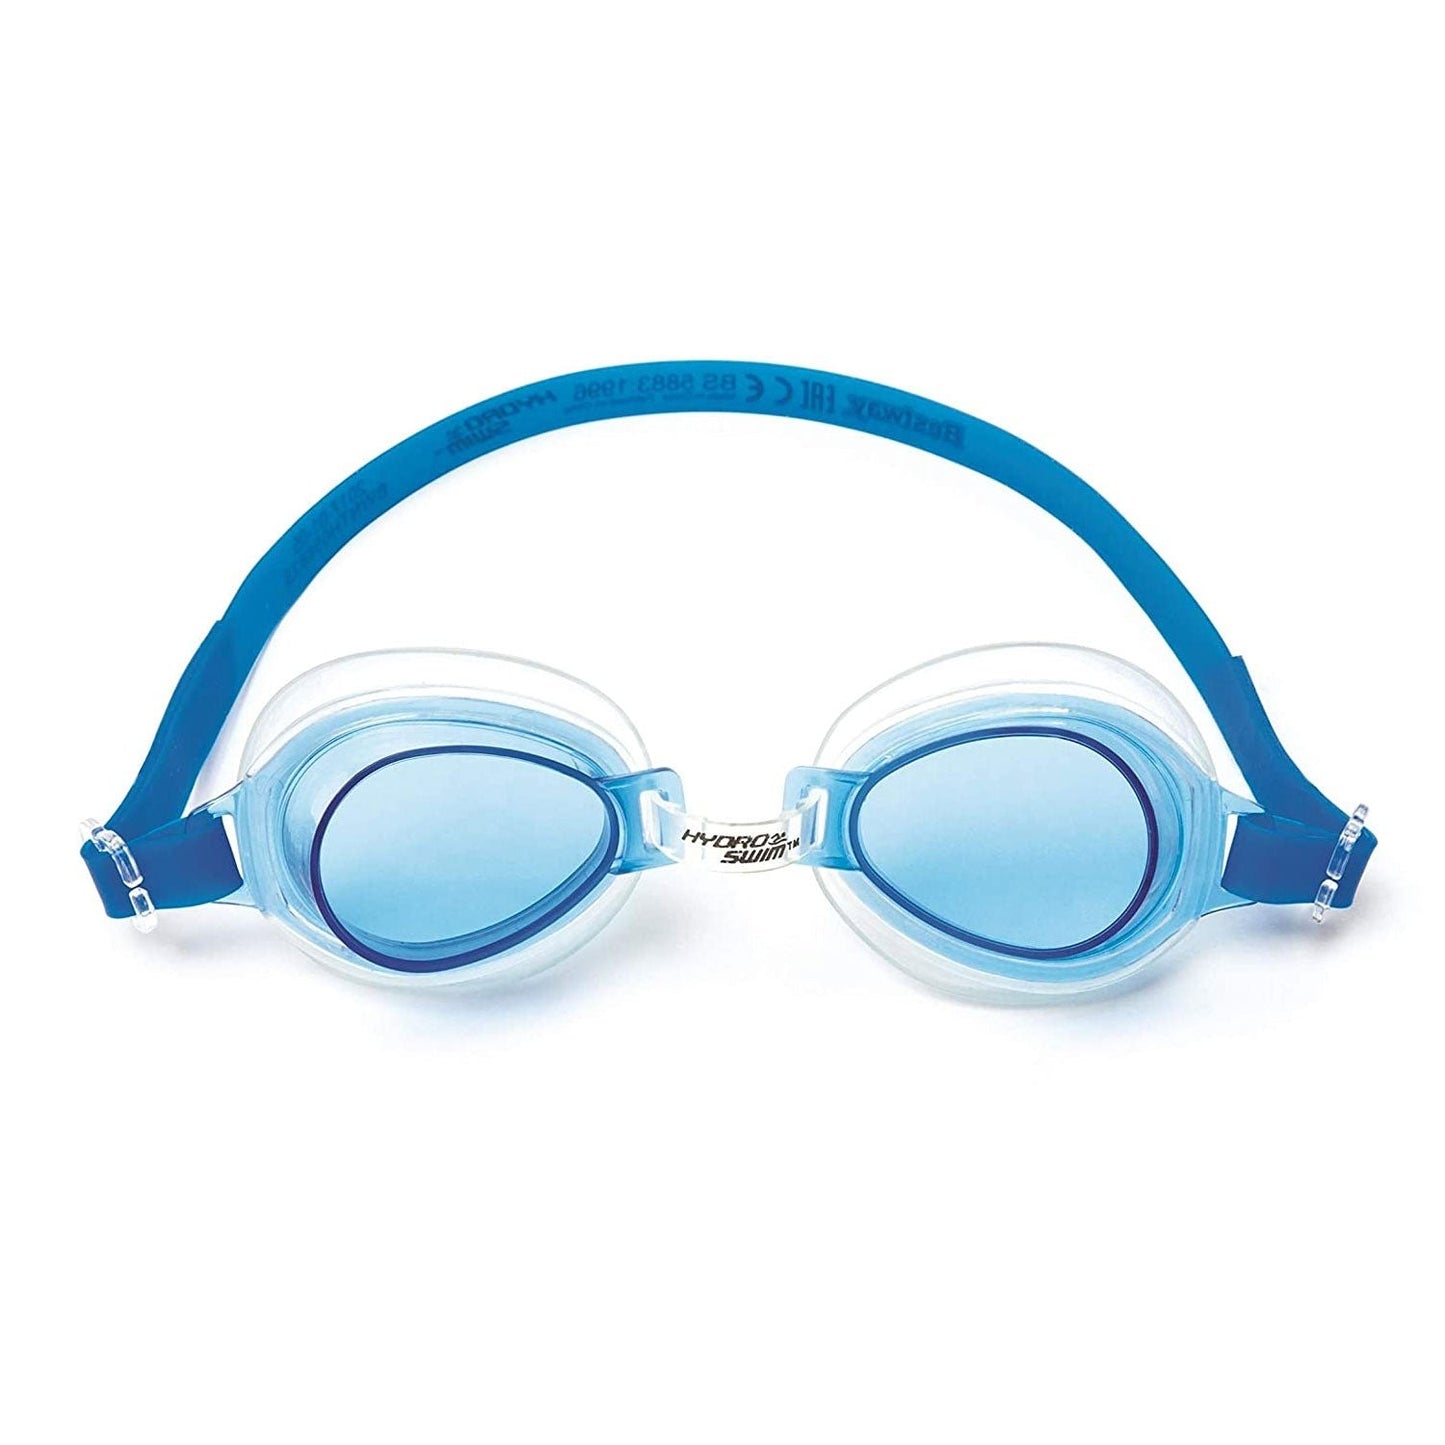 Bestway - Lightning Swimmer Goggles